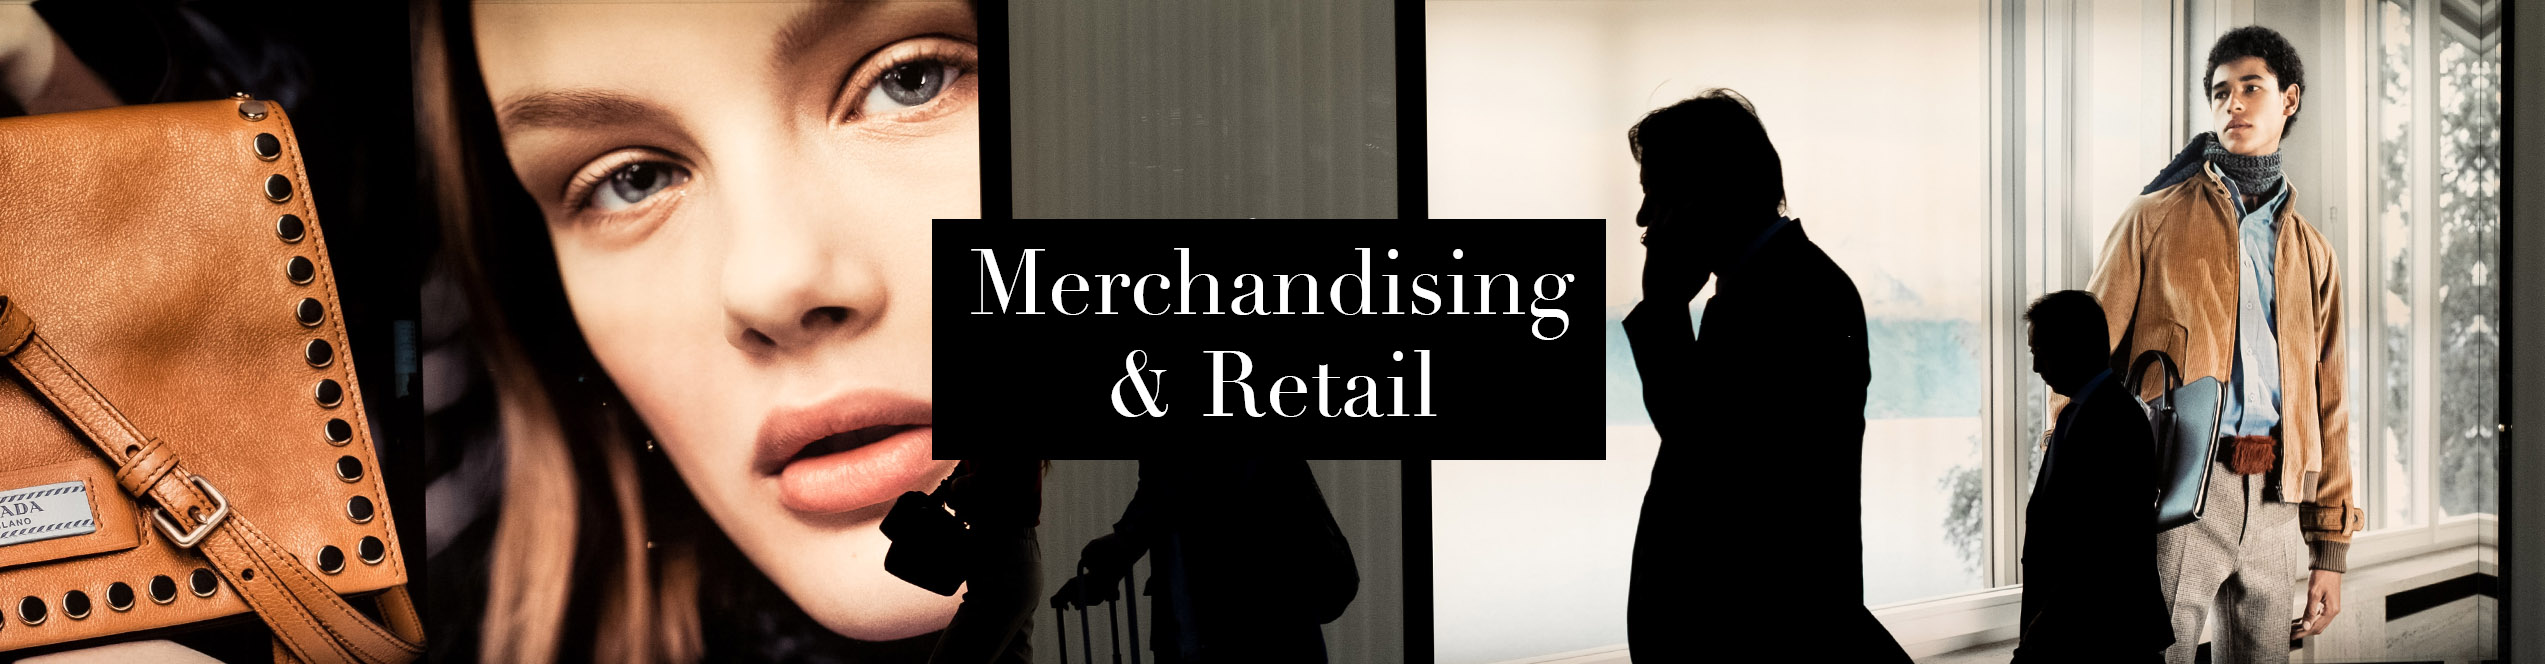 Rubrique Univers Merchandising & Retail